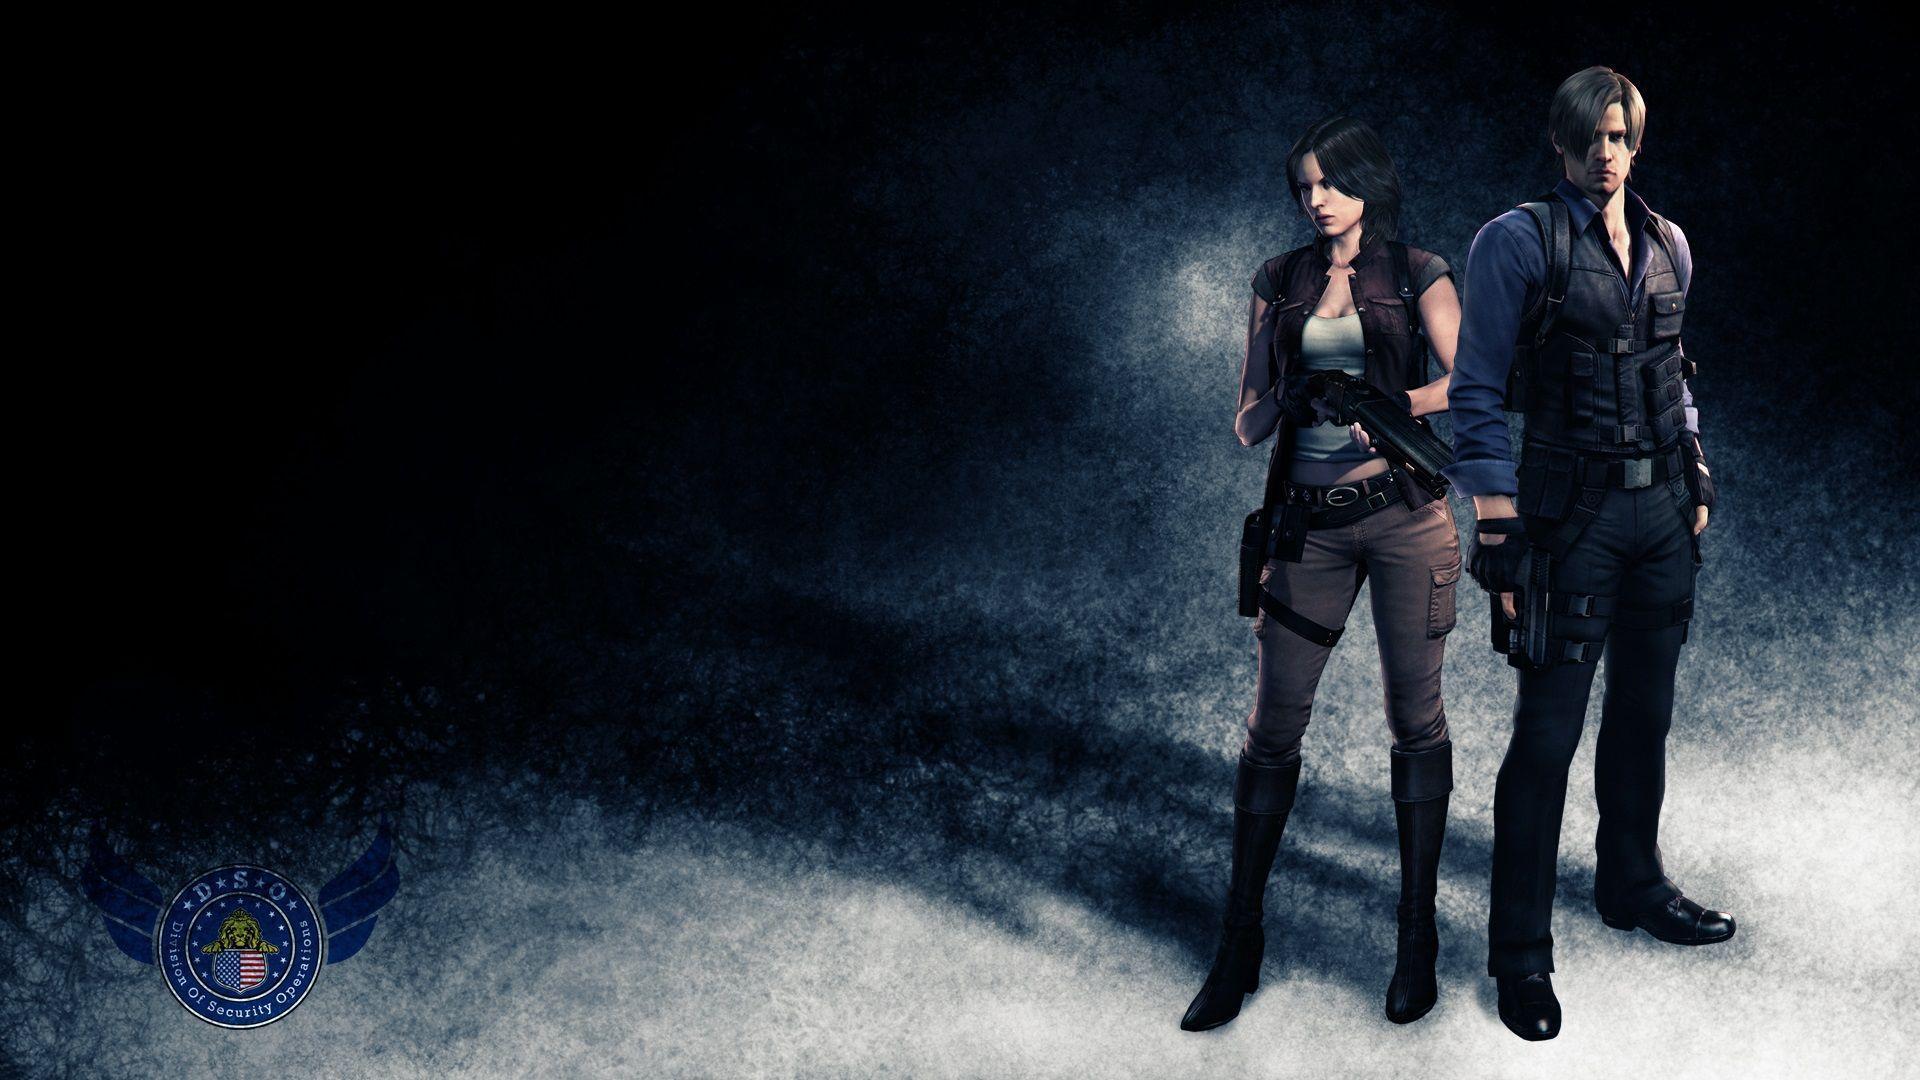 Resident Evil 6 / Biohazard 6 S. Kennedy. Steam Trading